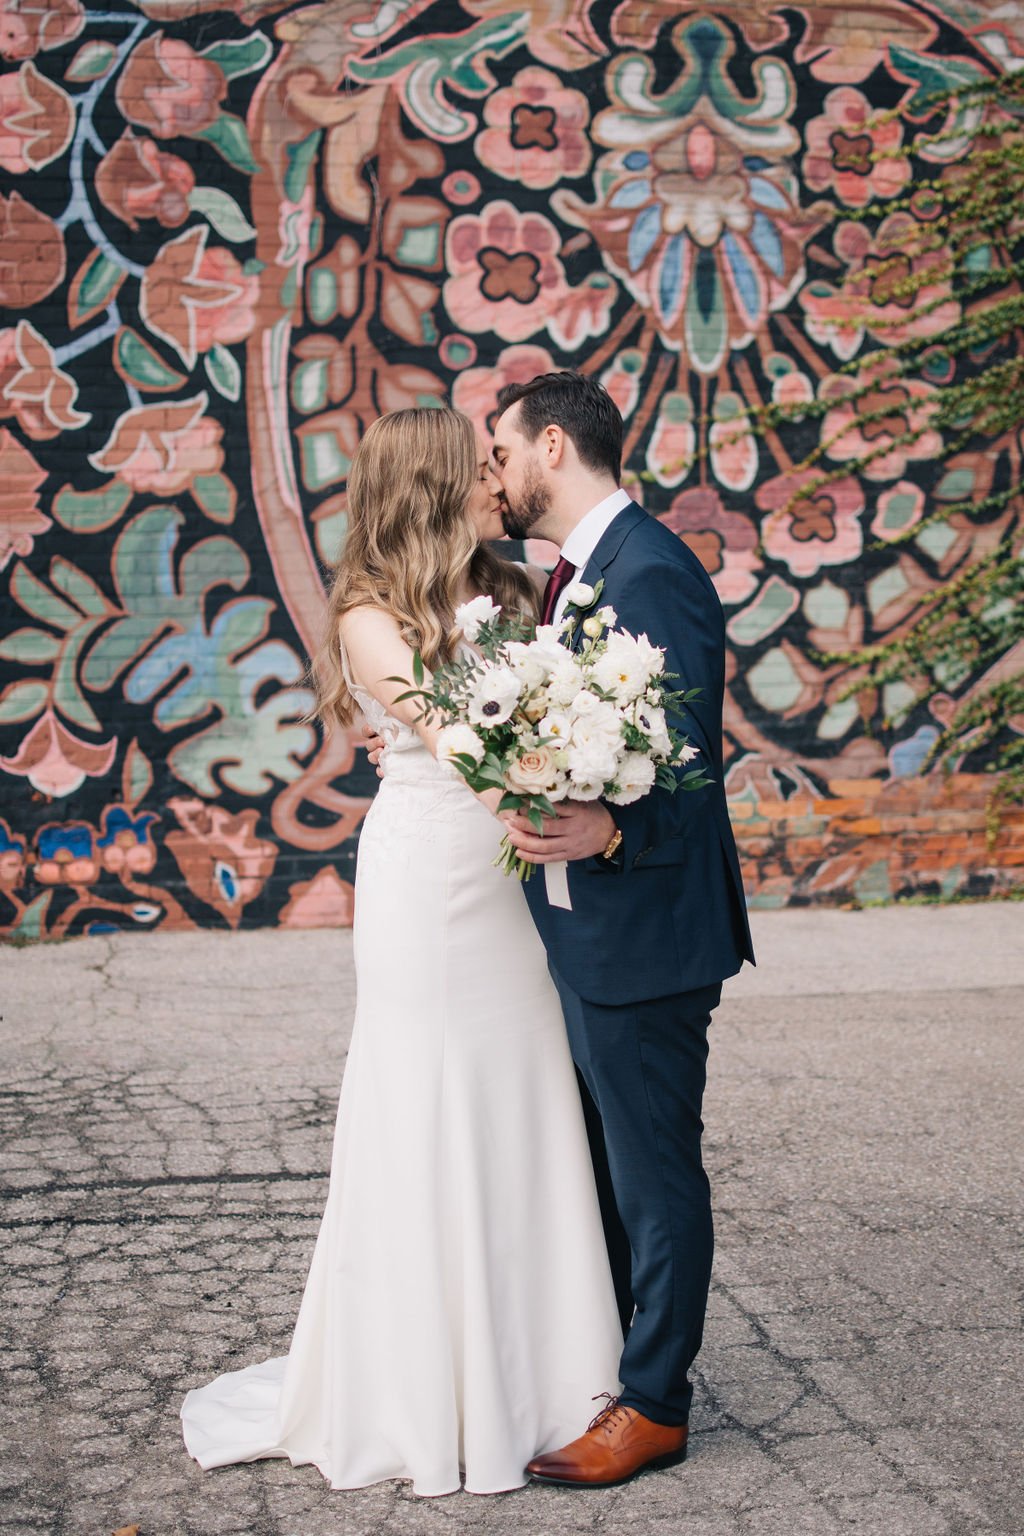 Elegant wedding day photographs at Toronto's Liberty Village's Carpet Factory by Toronto wedding photographers, Ugo Photography